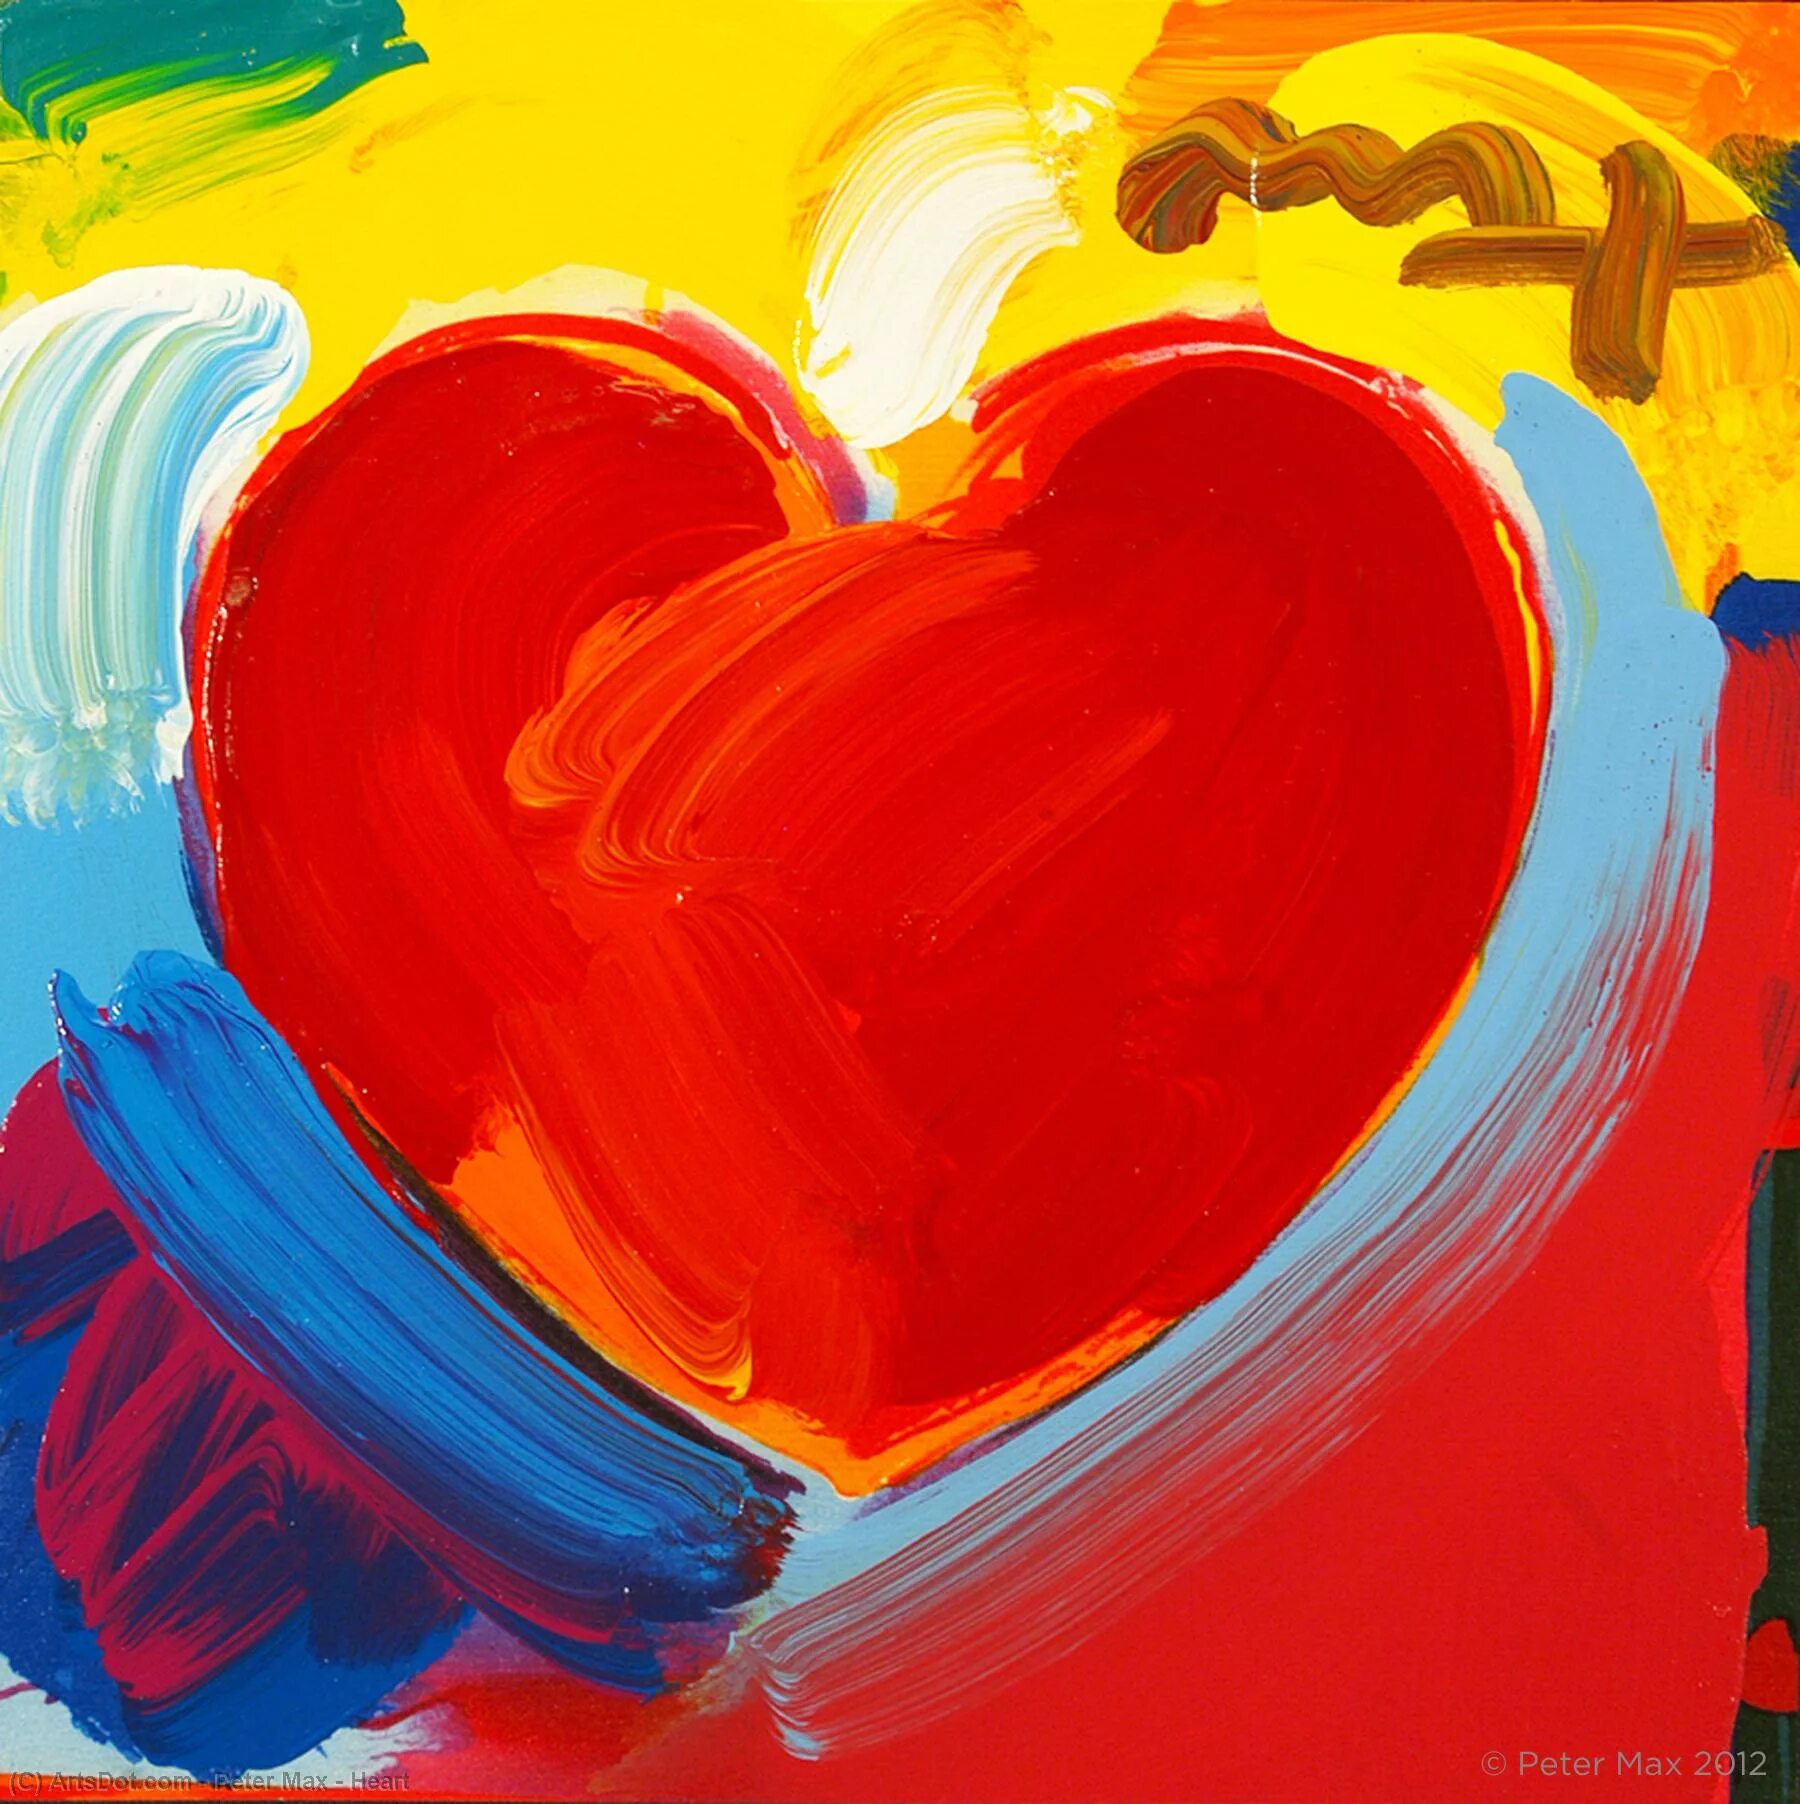 Большое сердце произведение. Сердце произведение искусства. Сердце творчество. Peter Max. Питер Макс картины.